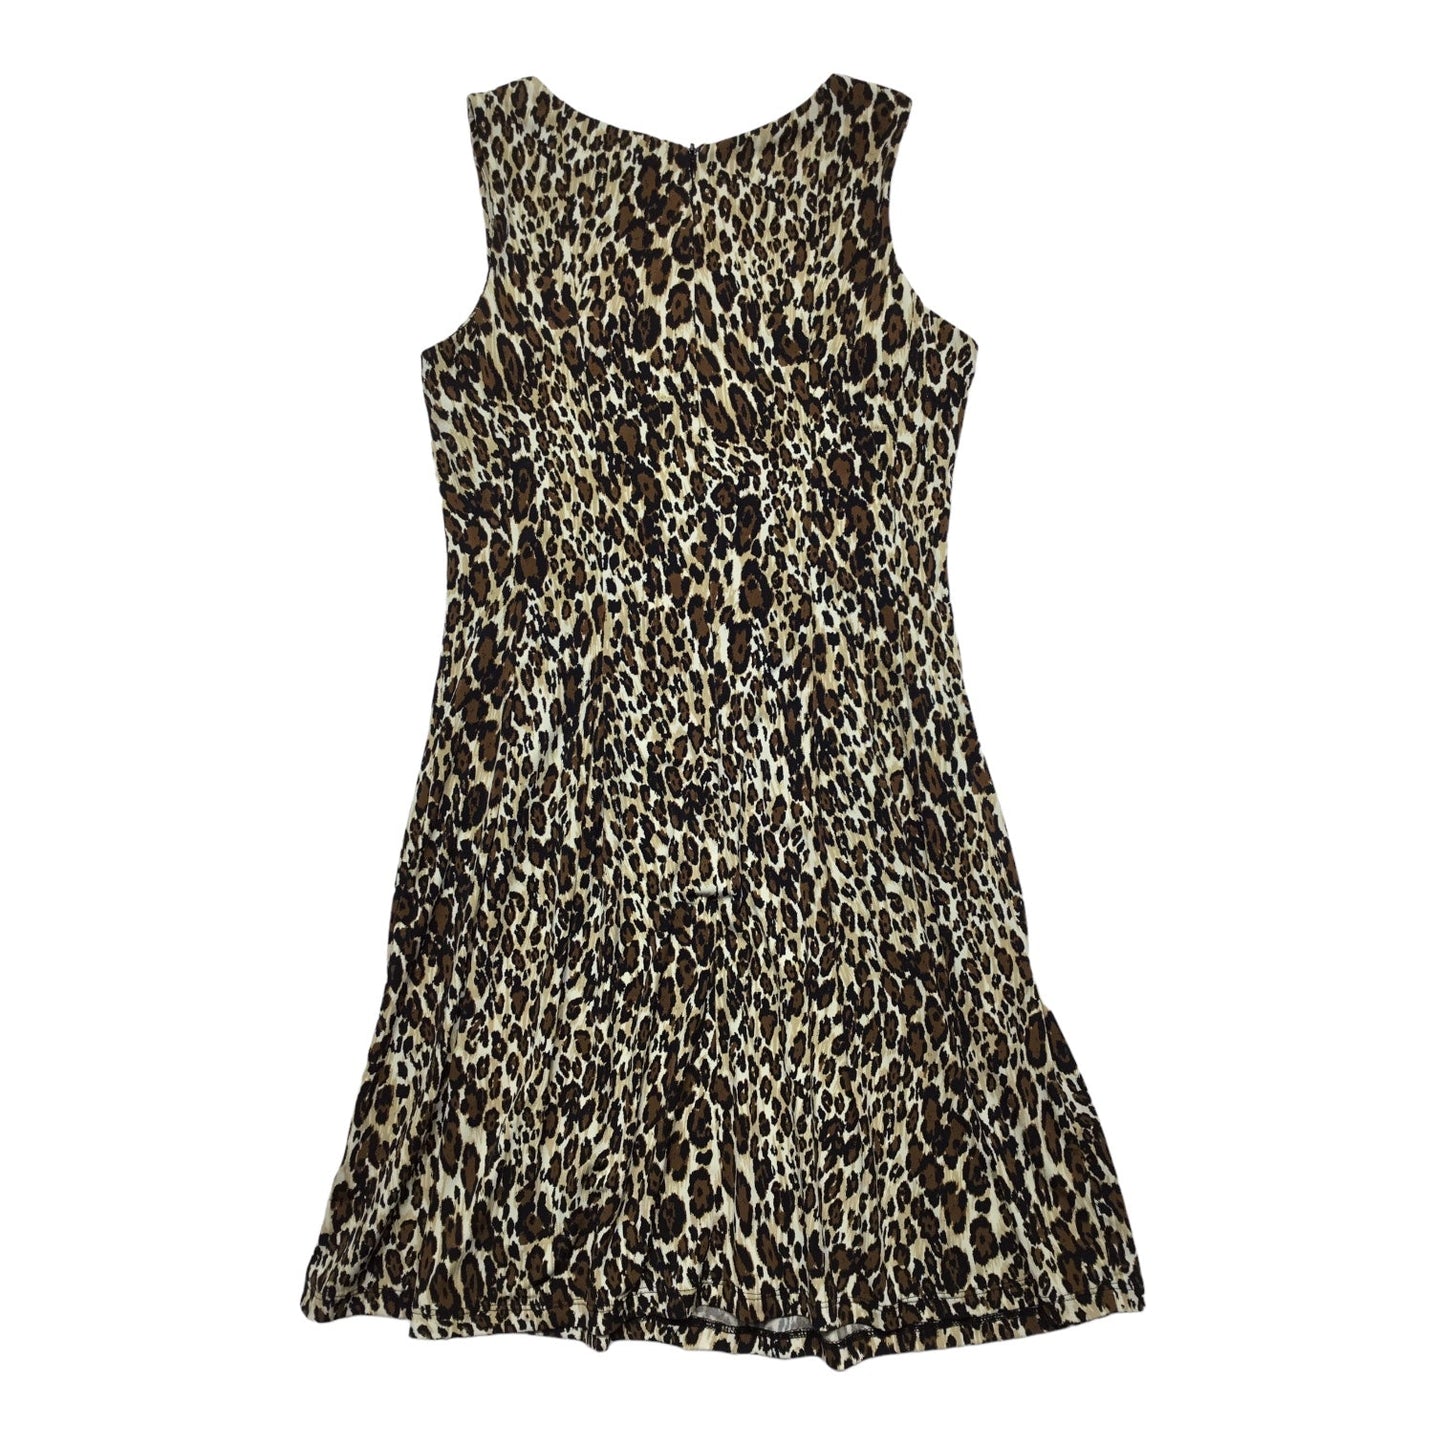 Dress Casual Short By Gabby Skye  Size: 10